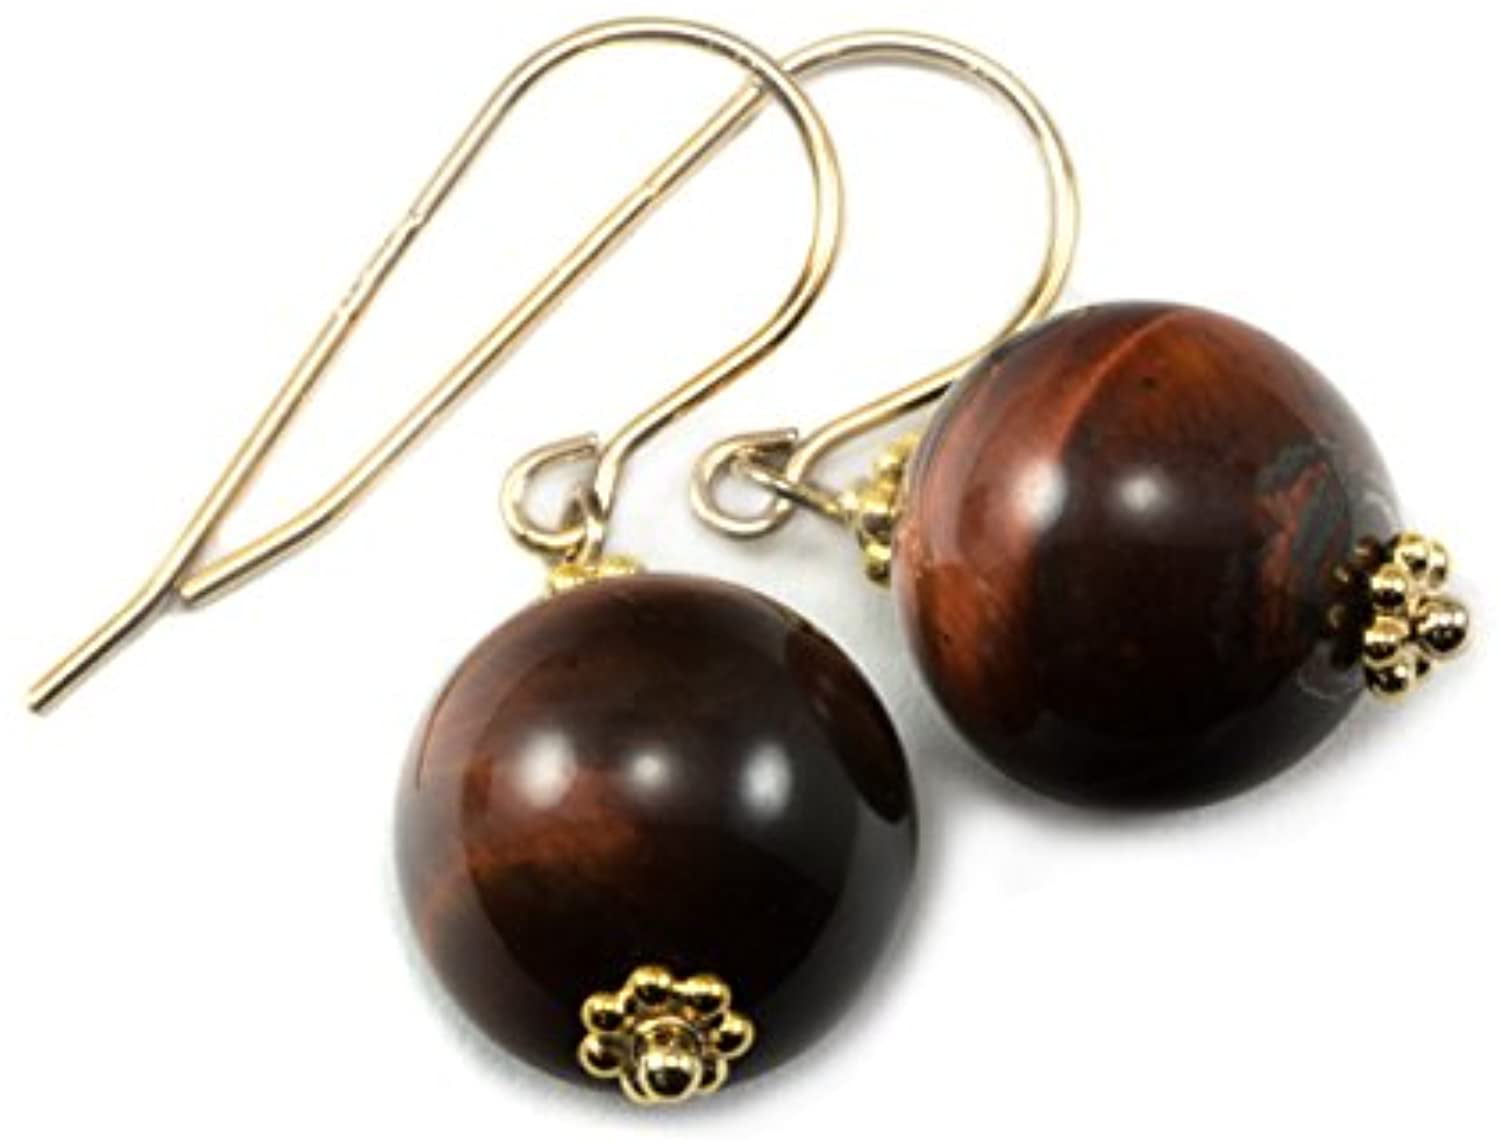 Round Tigers Eye Earrings Gold plated leverbacks cute brown gemstone jewelry 